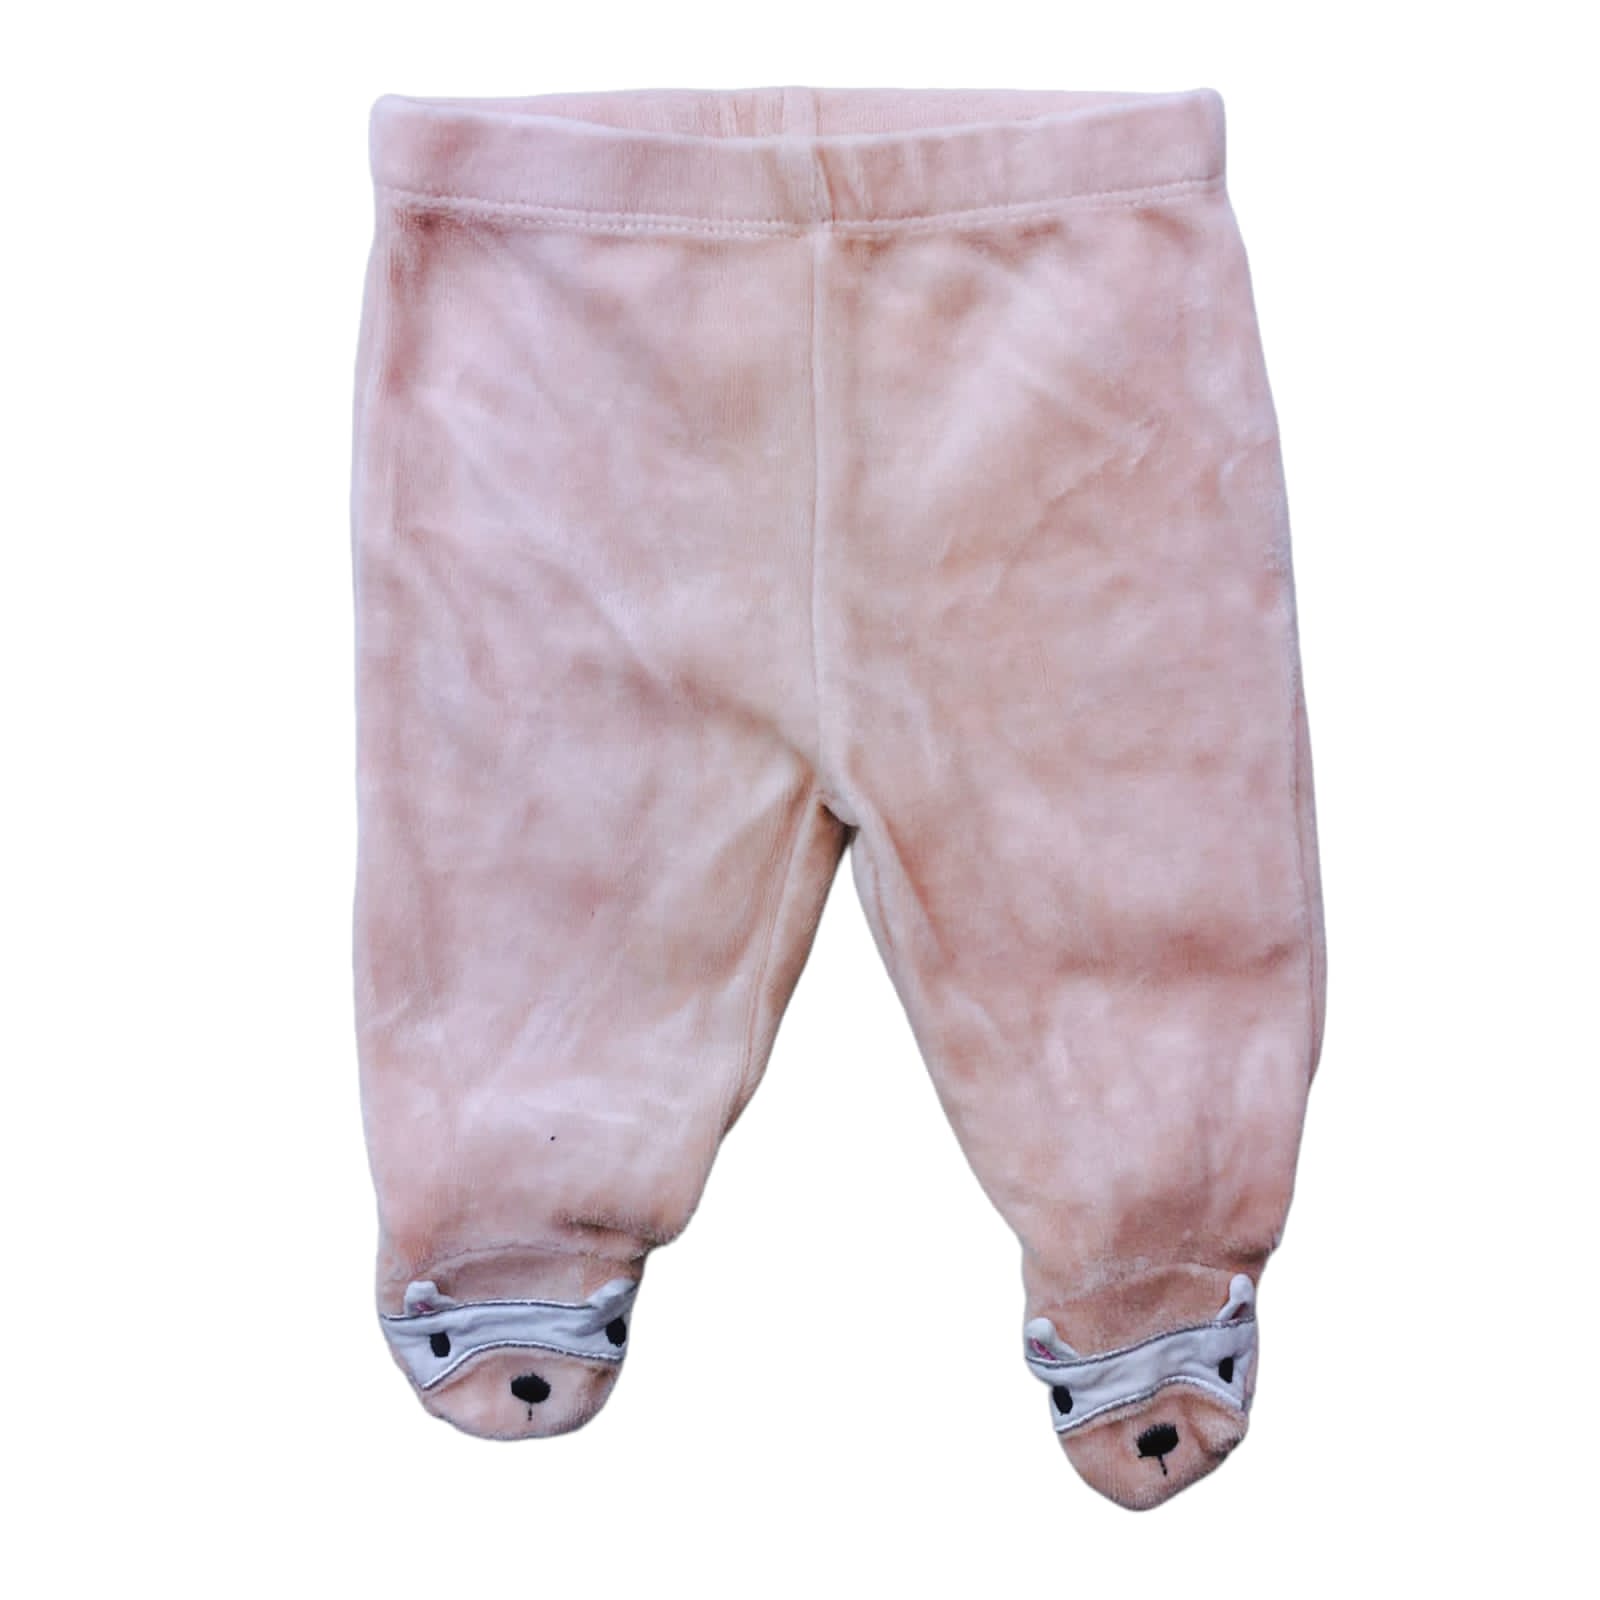 Panty de plush damasco con detalles en blanco